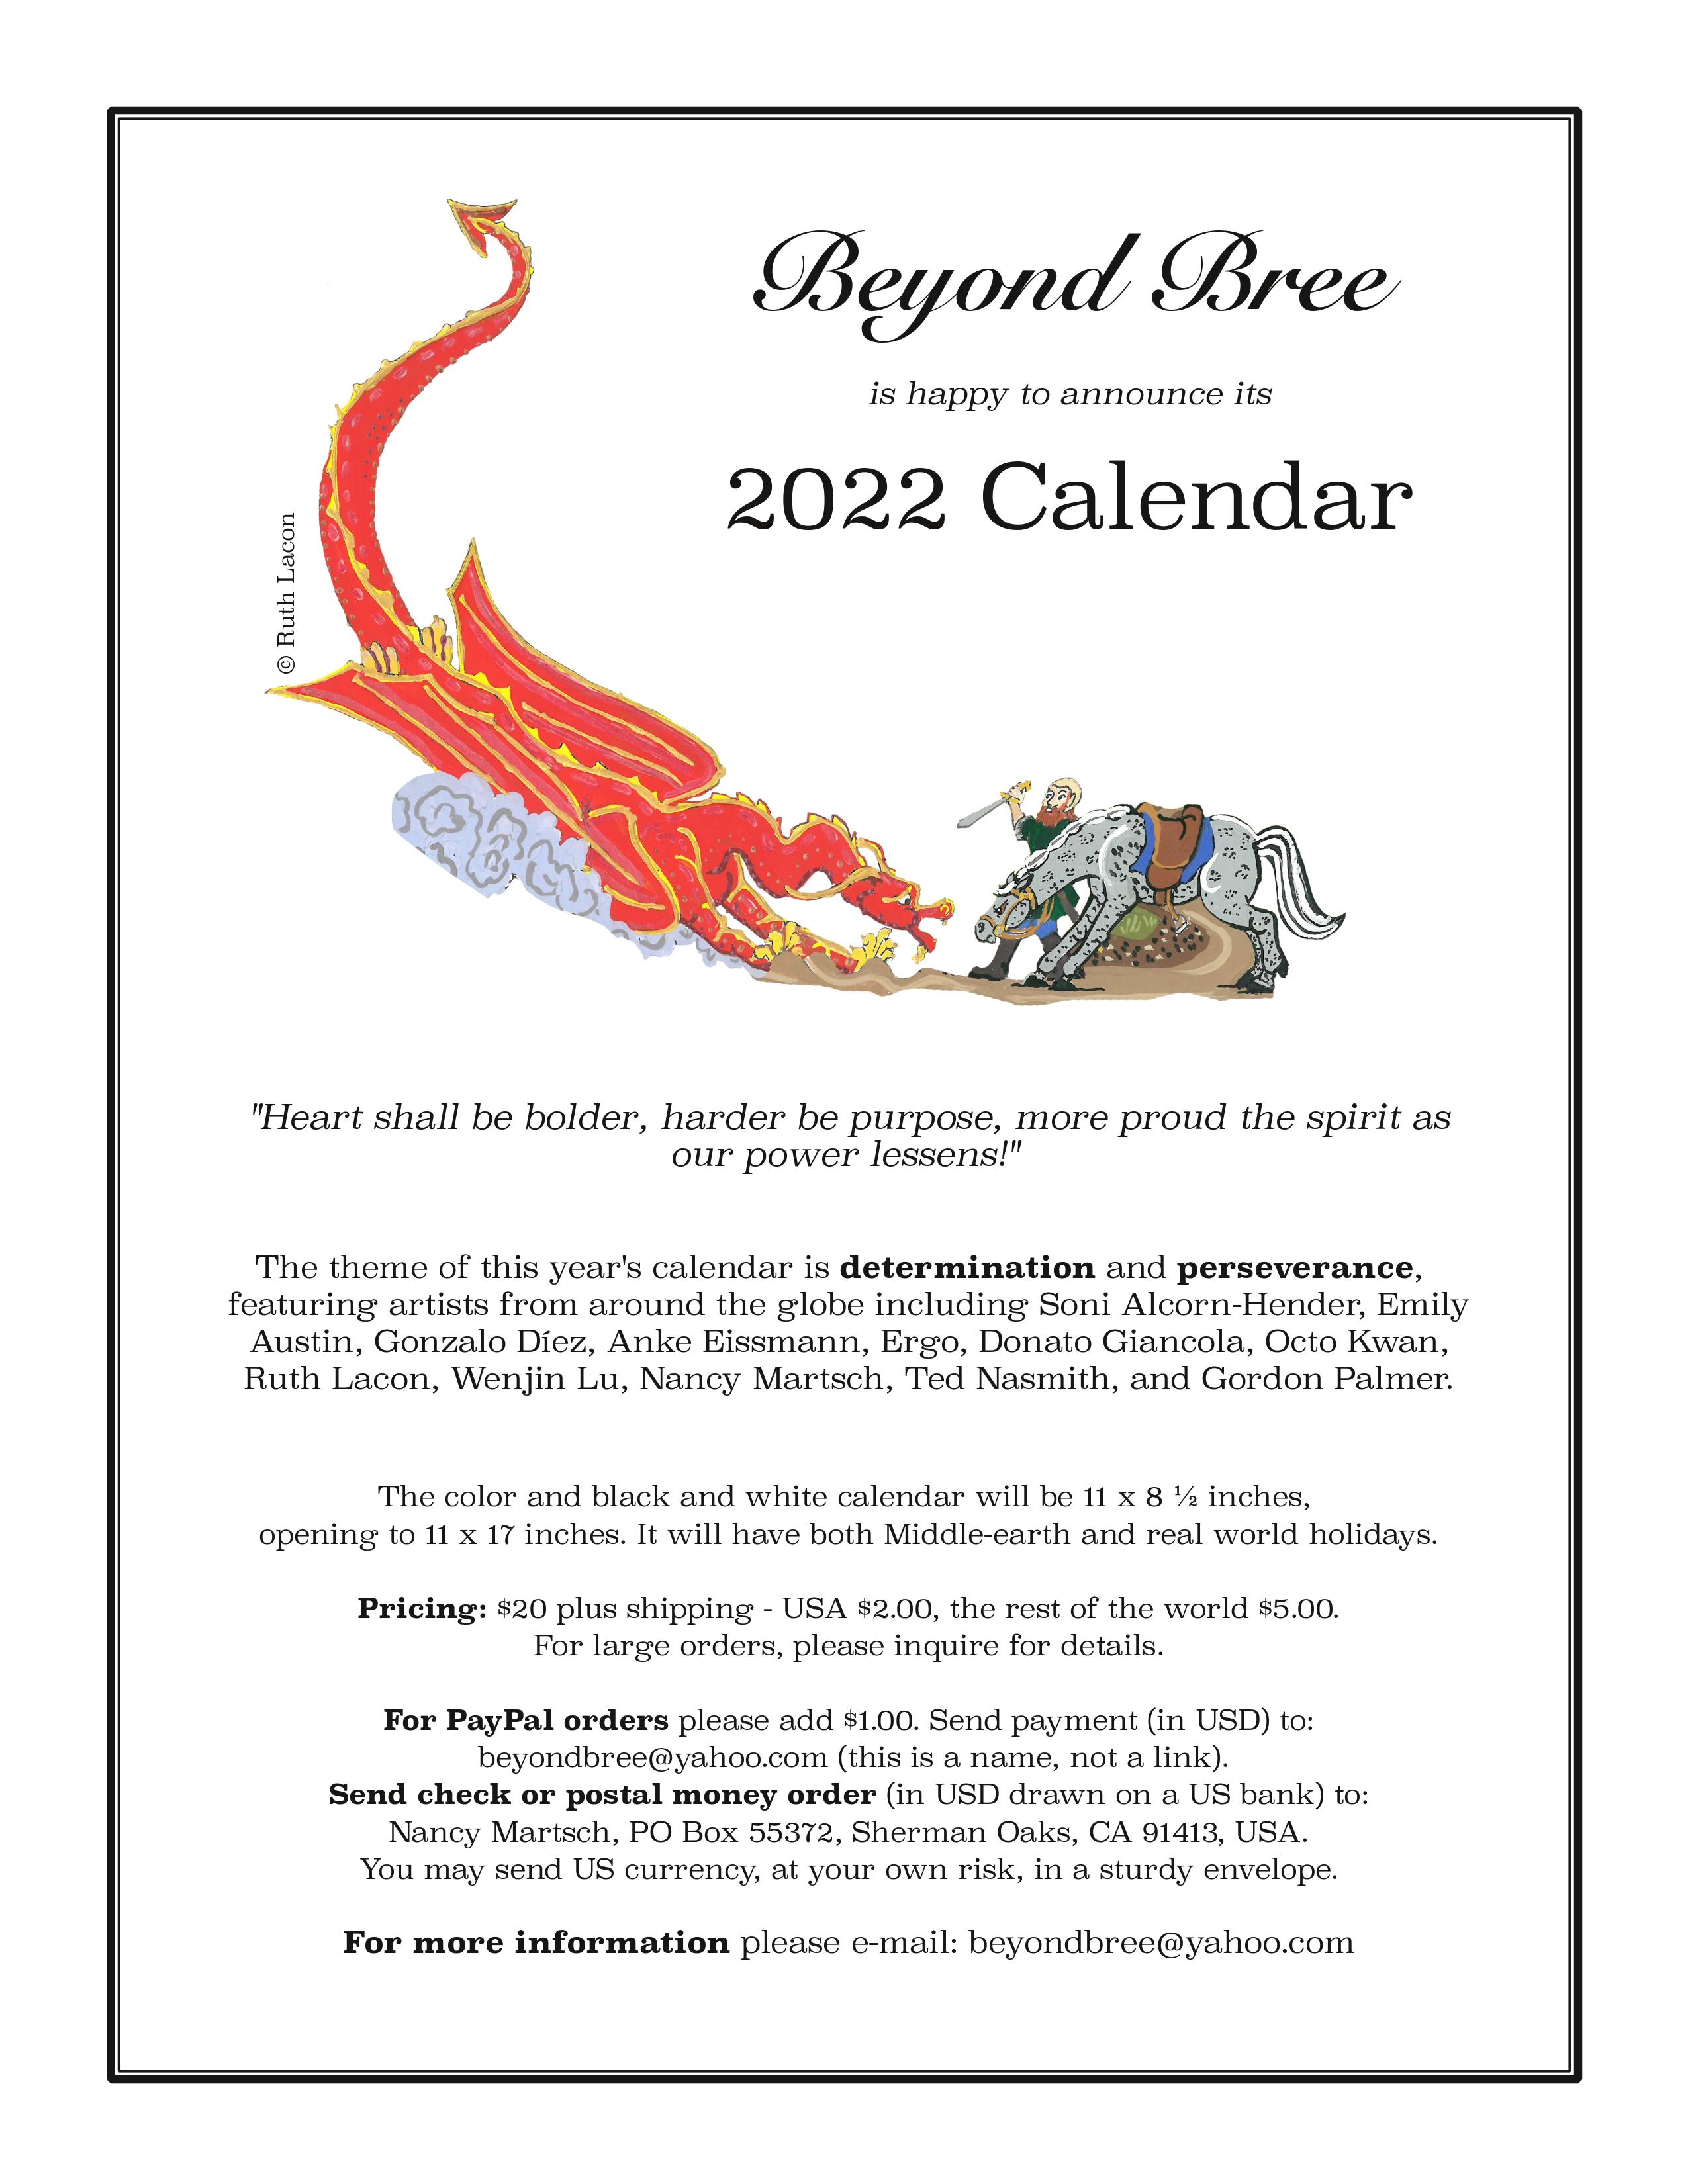 Beyond Bree 2022 calendar flyer large.jpg